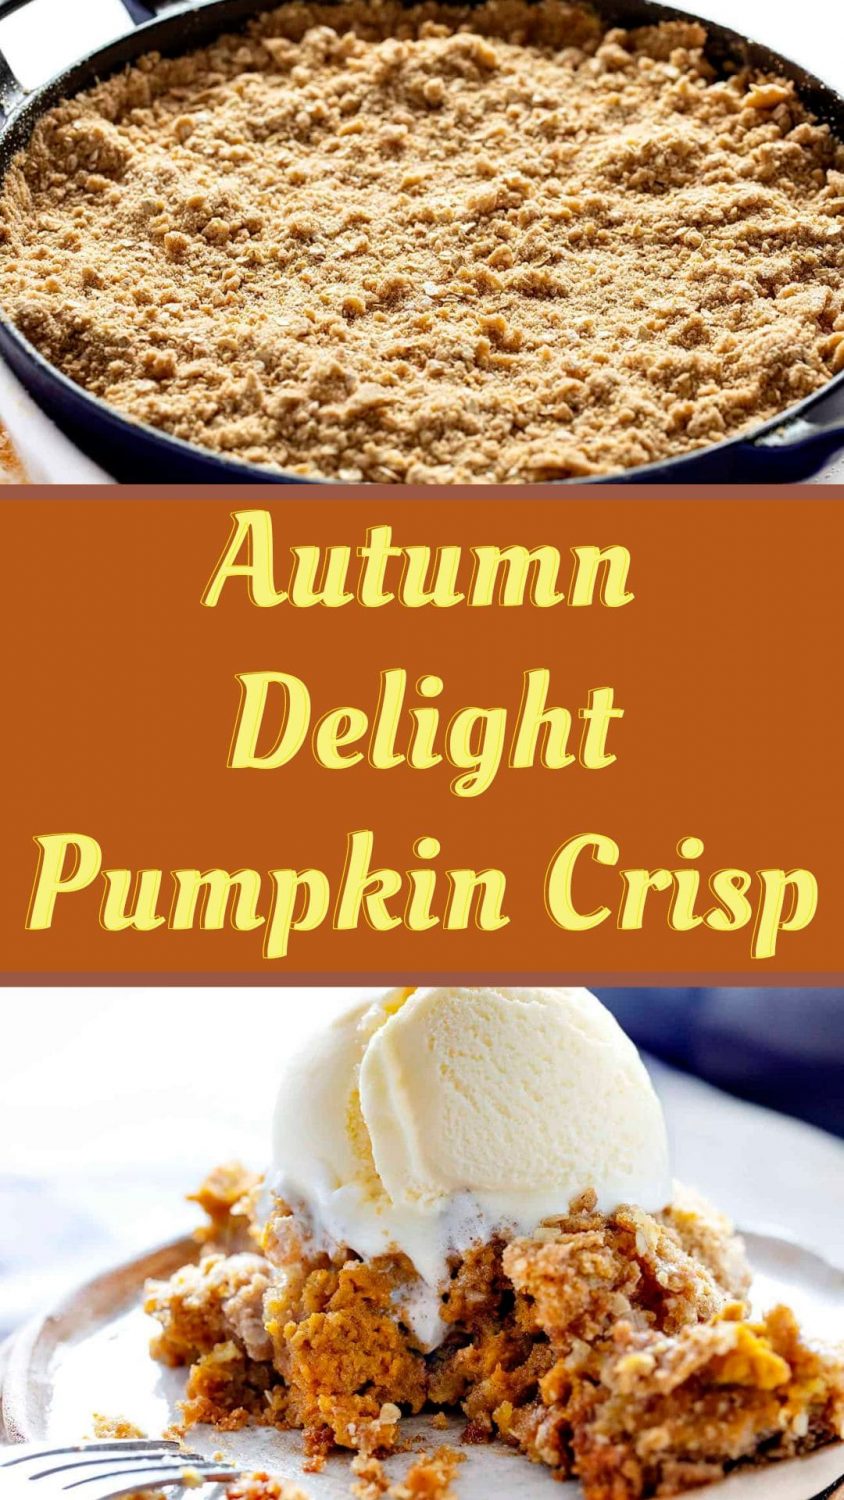 Autumn Delight Pumpkin Crisp